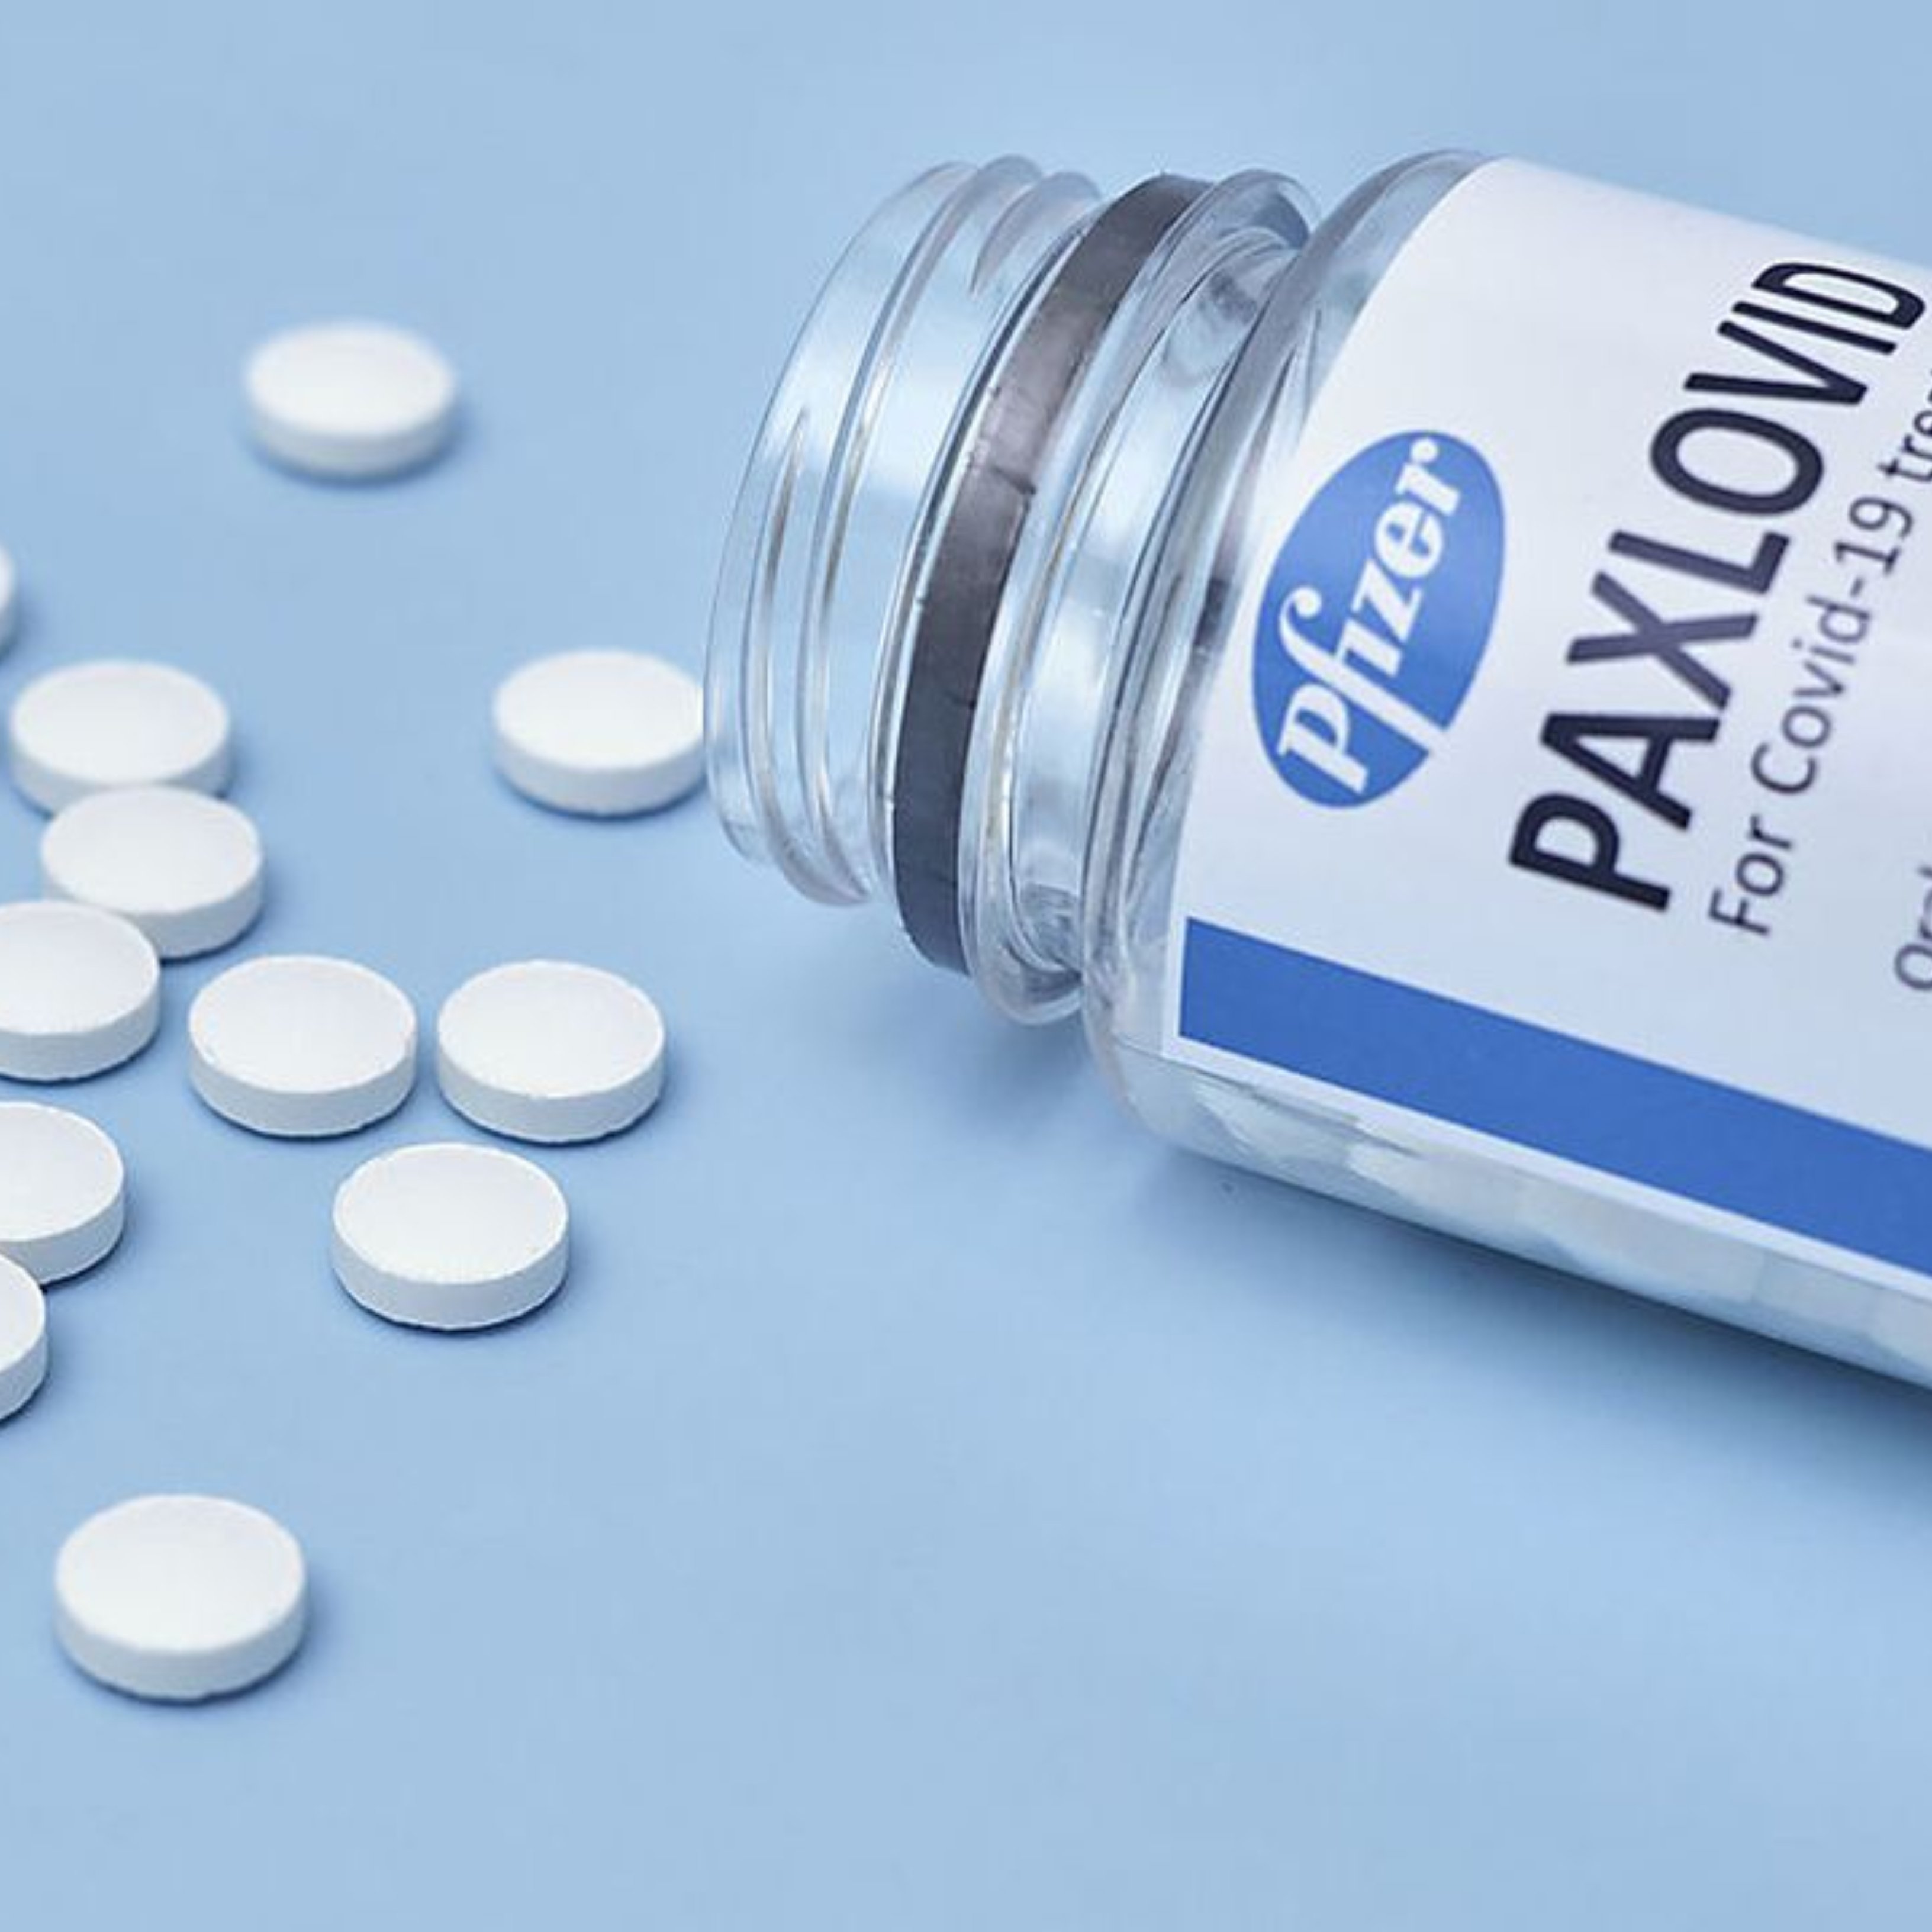 Les claus de Paxlovid, el primer antiviral oral contra la covid-19